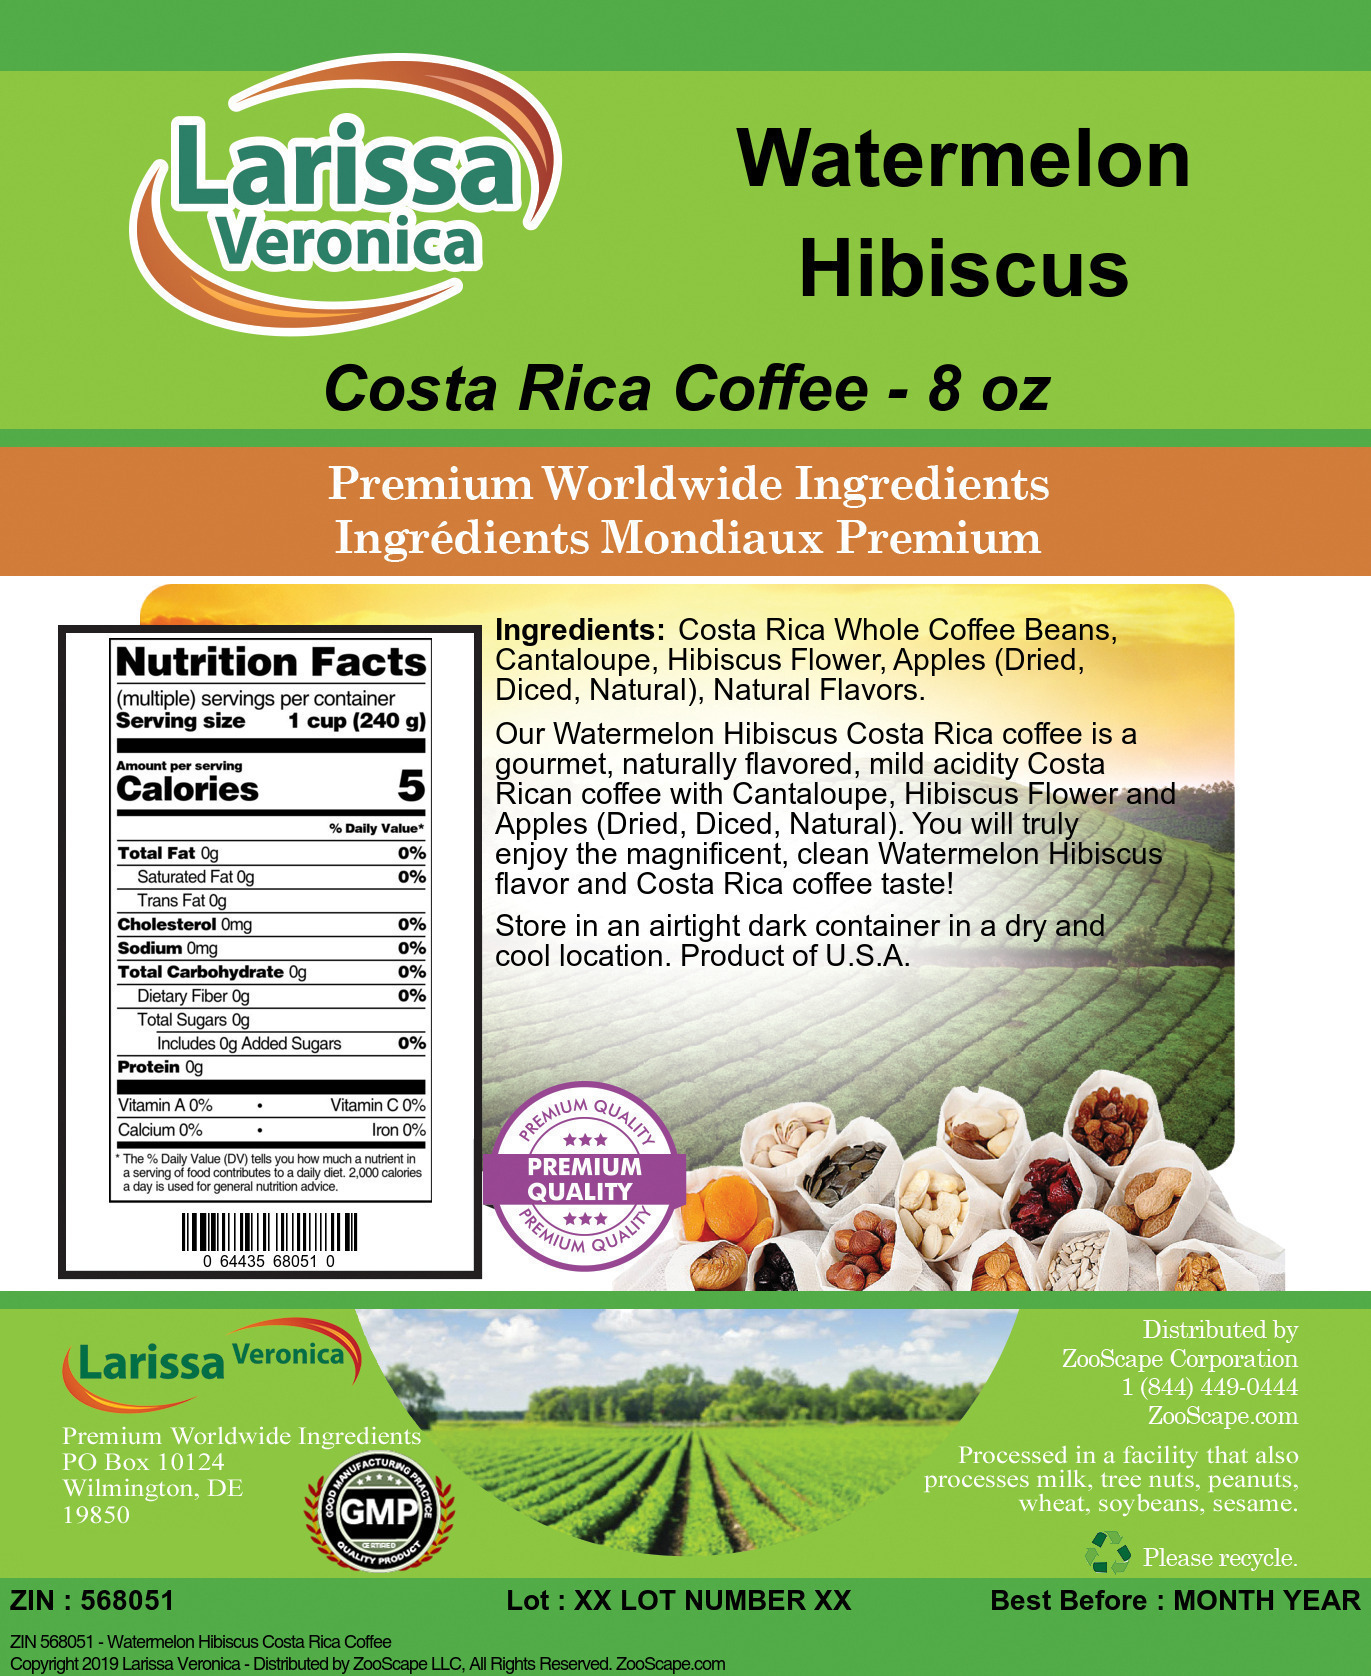 Watermelon Hibiscus Costa Rica Coffee - Label